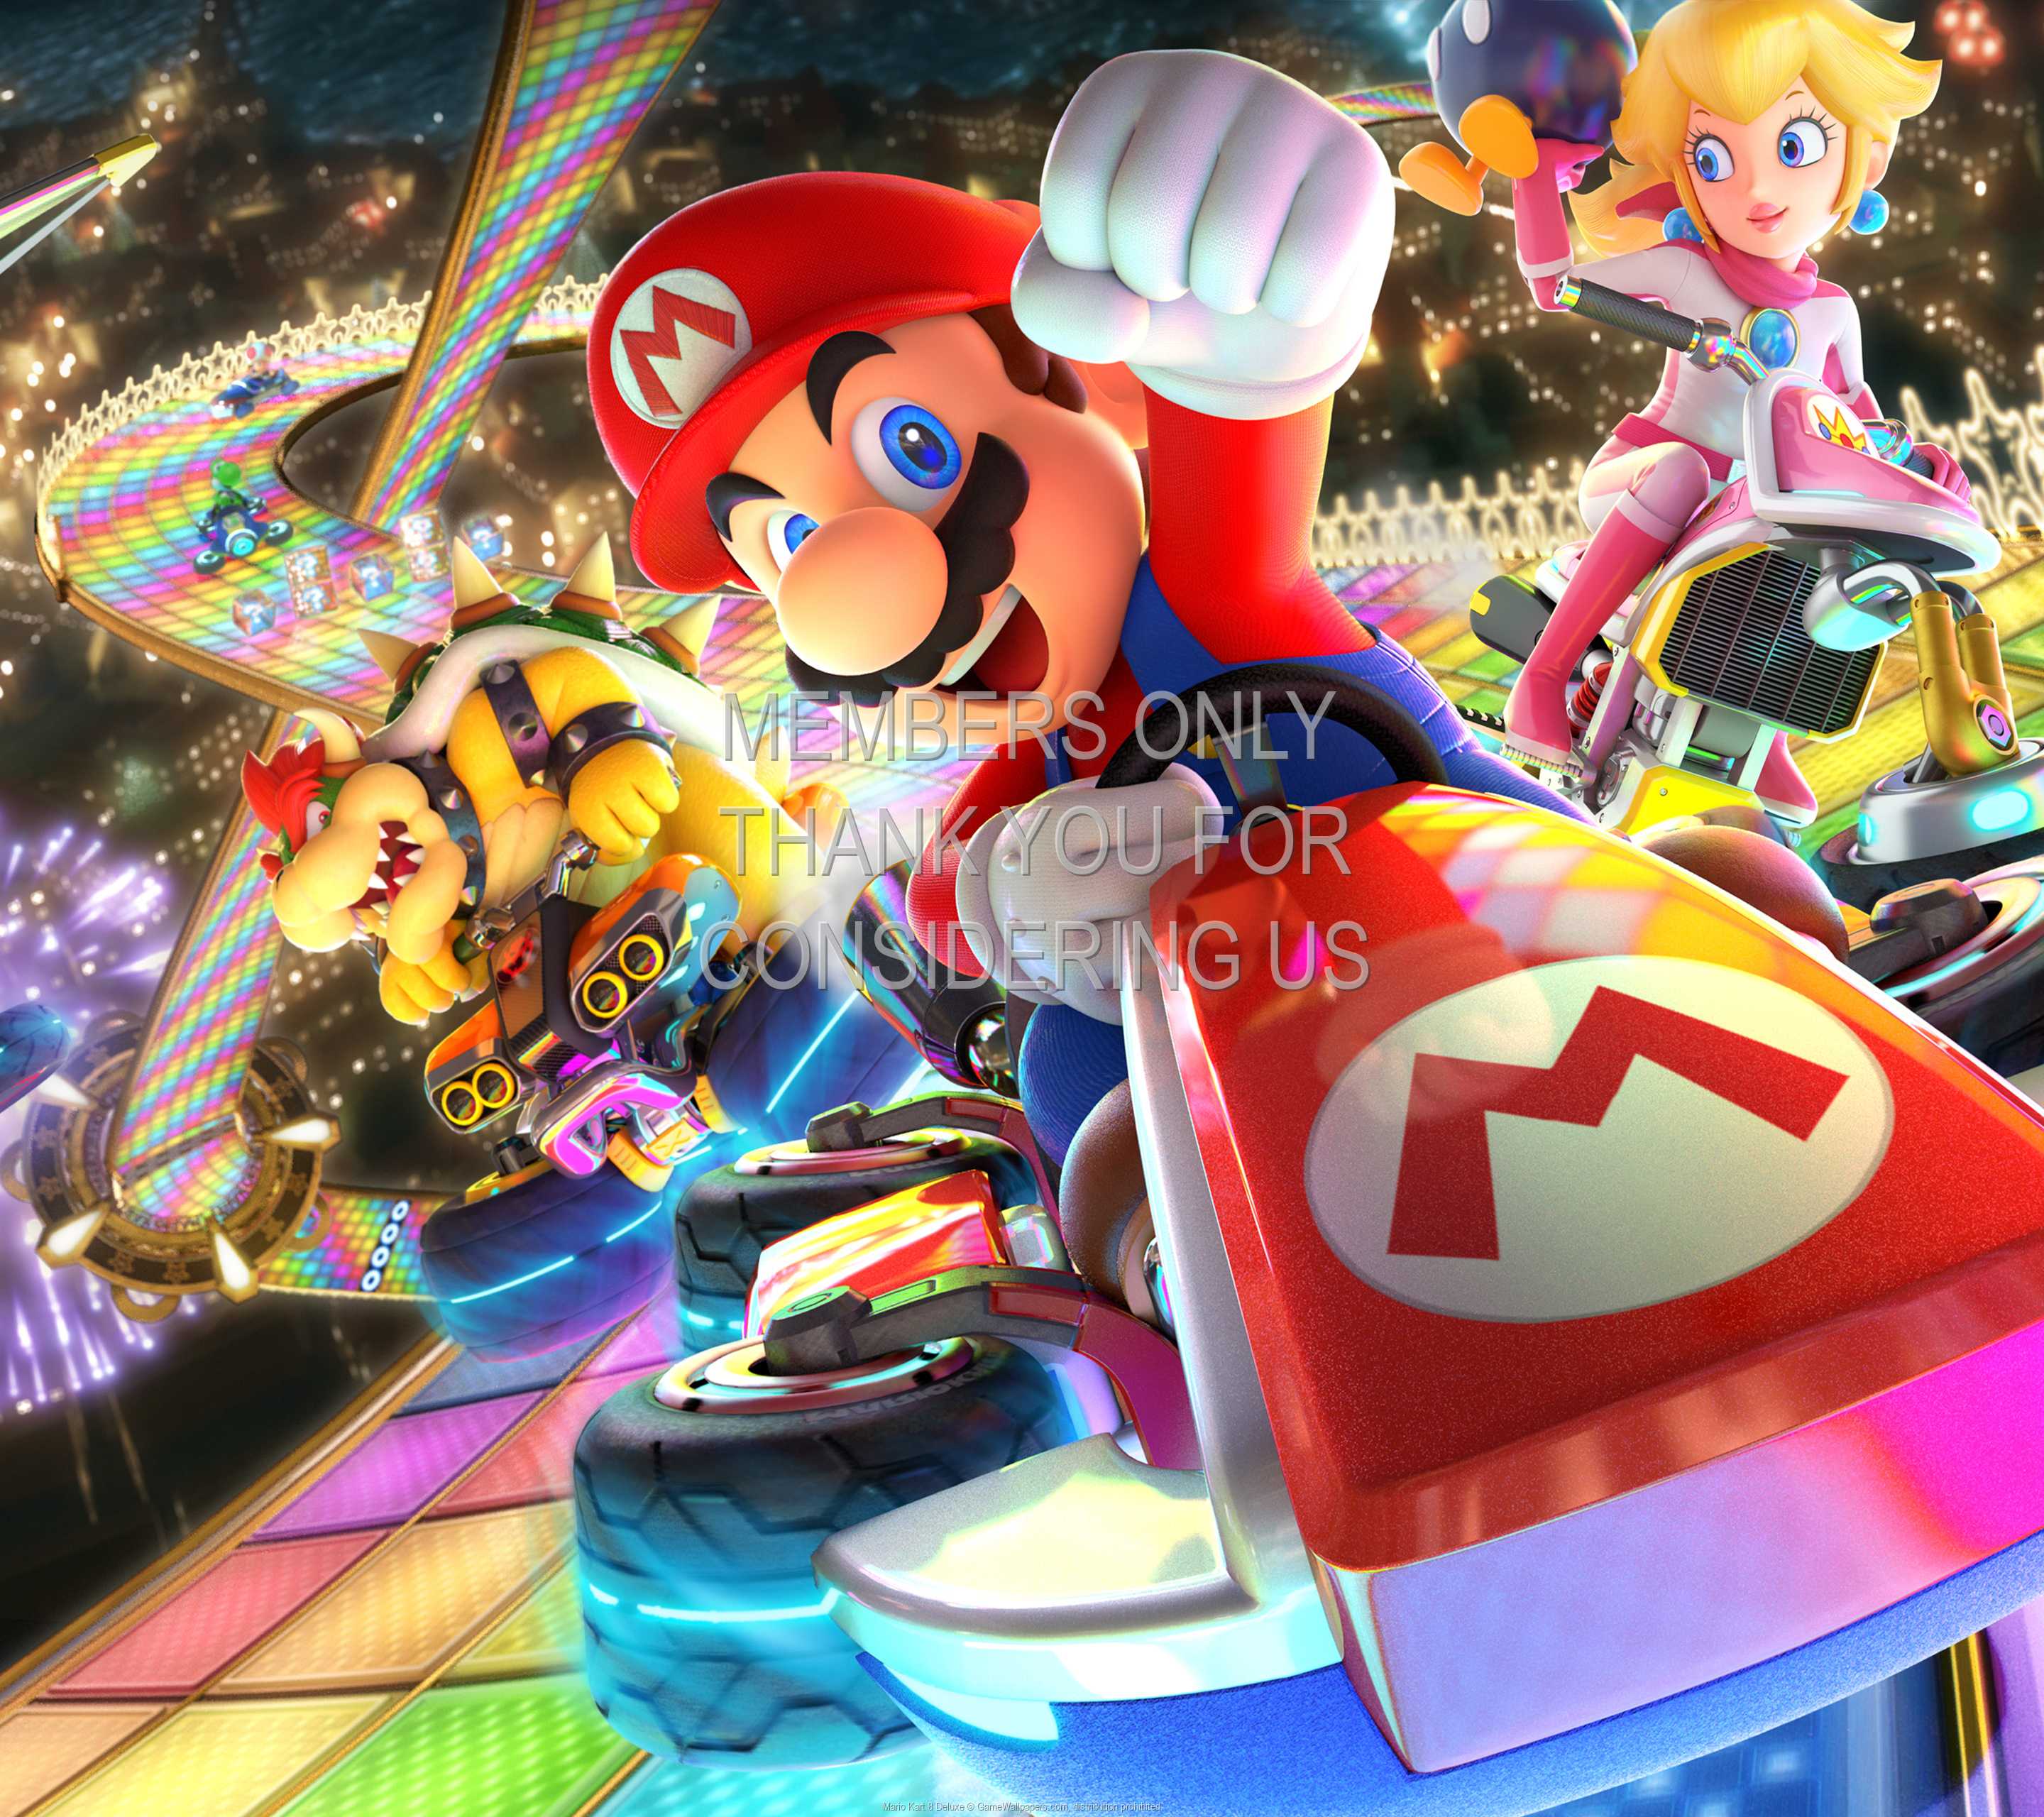 Mario Kart 8 Deluxe 1440p Horizontal Mobile wallpaper or background 01